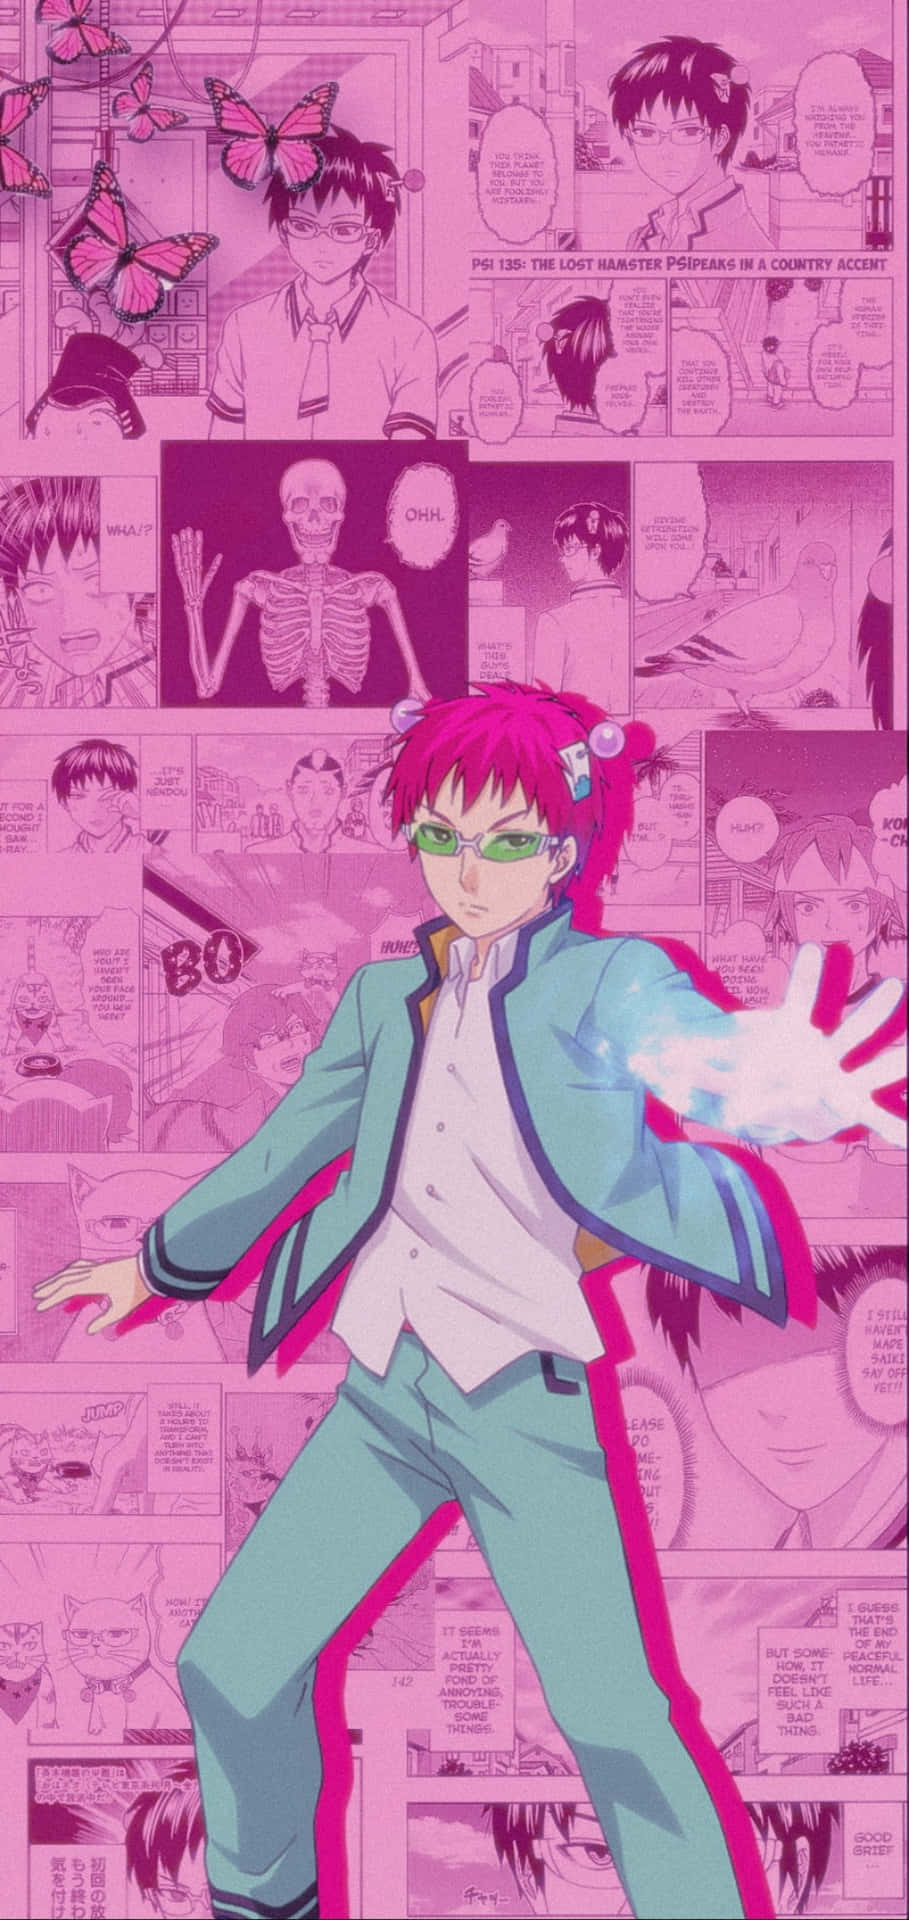 Saiki kusuo anime Wallpapers Download | MobCup